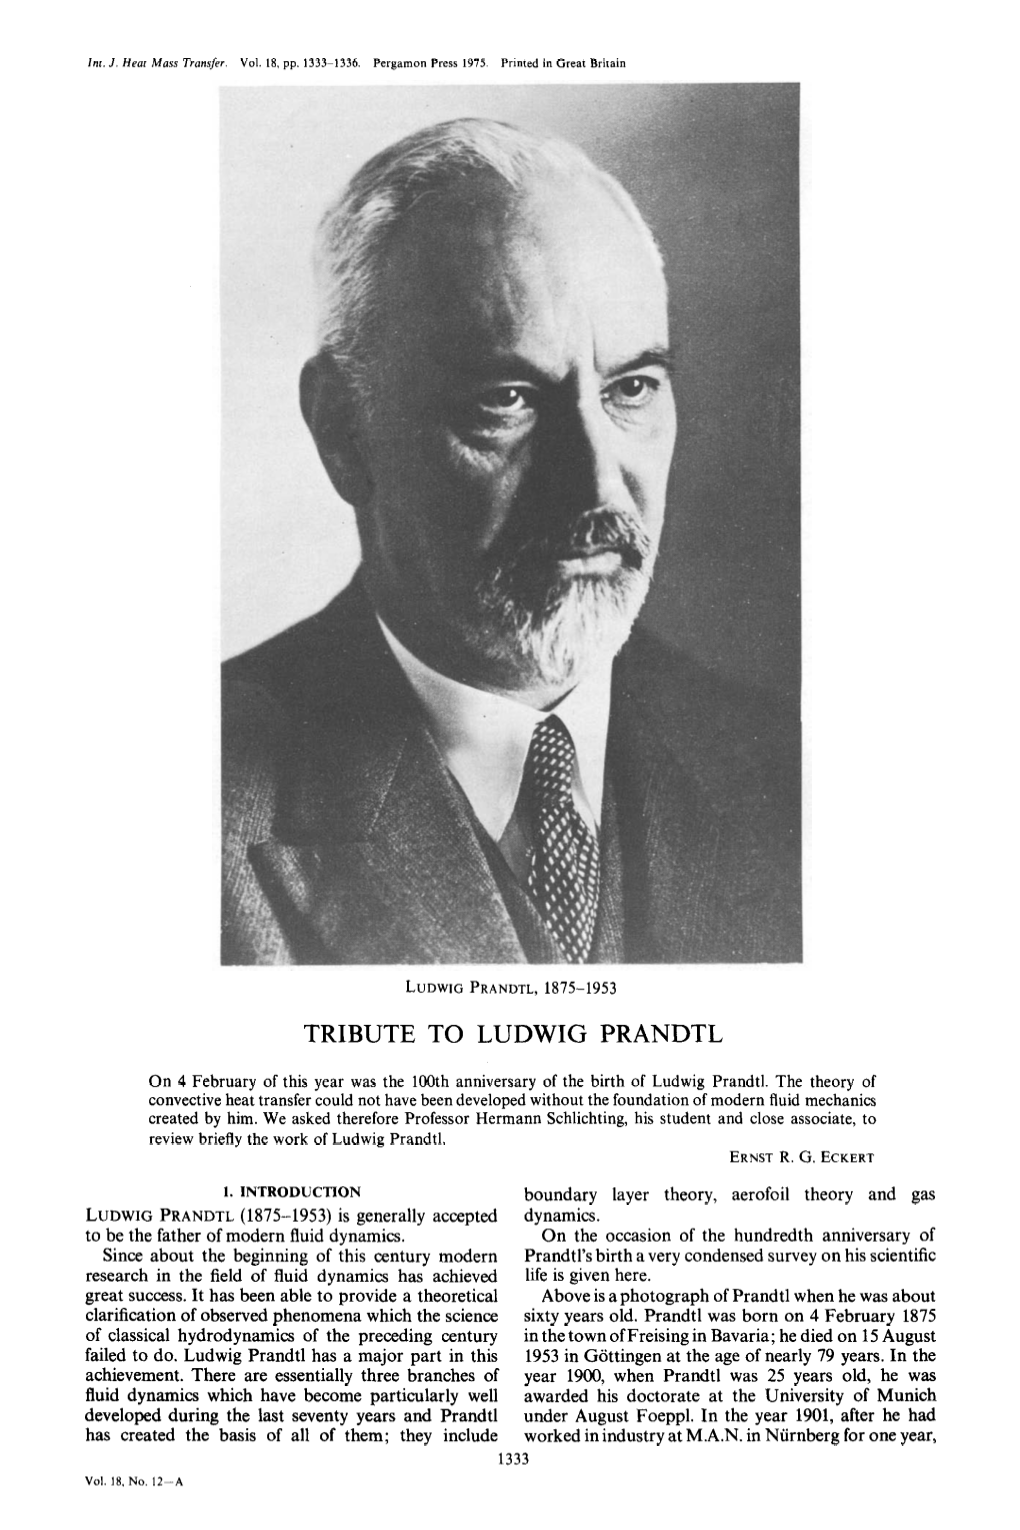 Tribute to Ludwig Prandtl